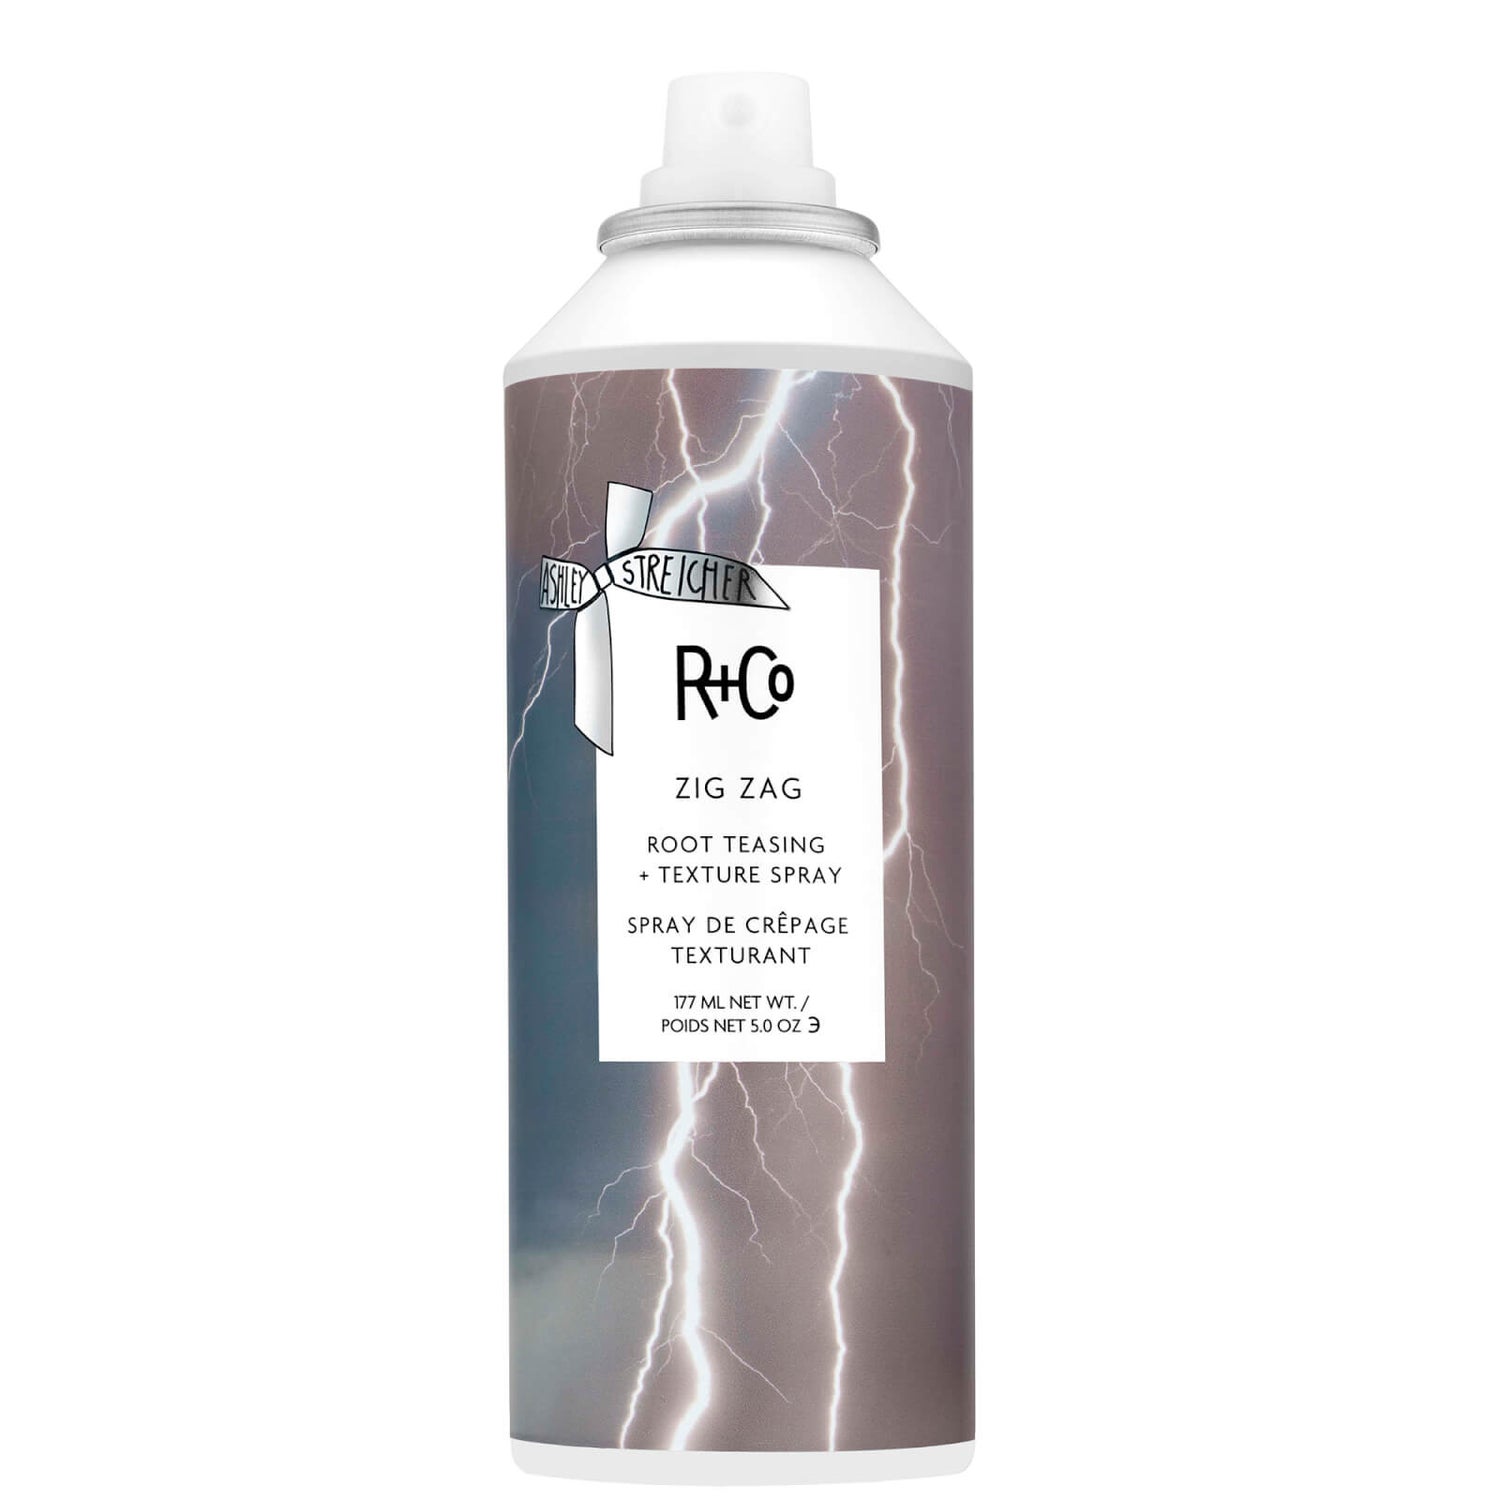 R+Co Zig Zag Root Teasing Texture Spray 5 oz